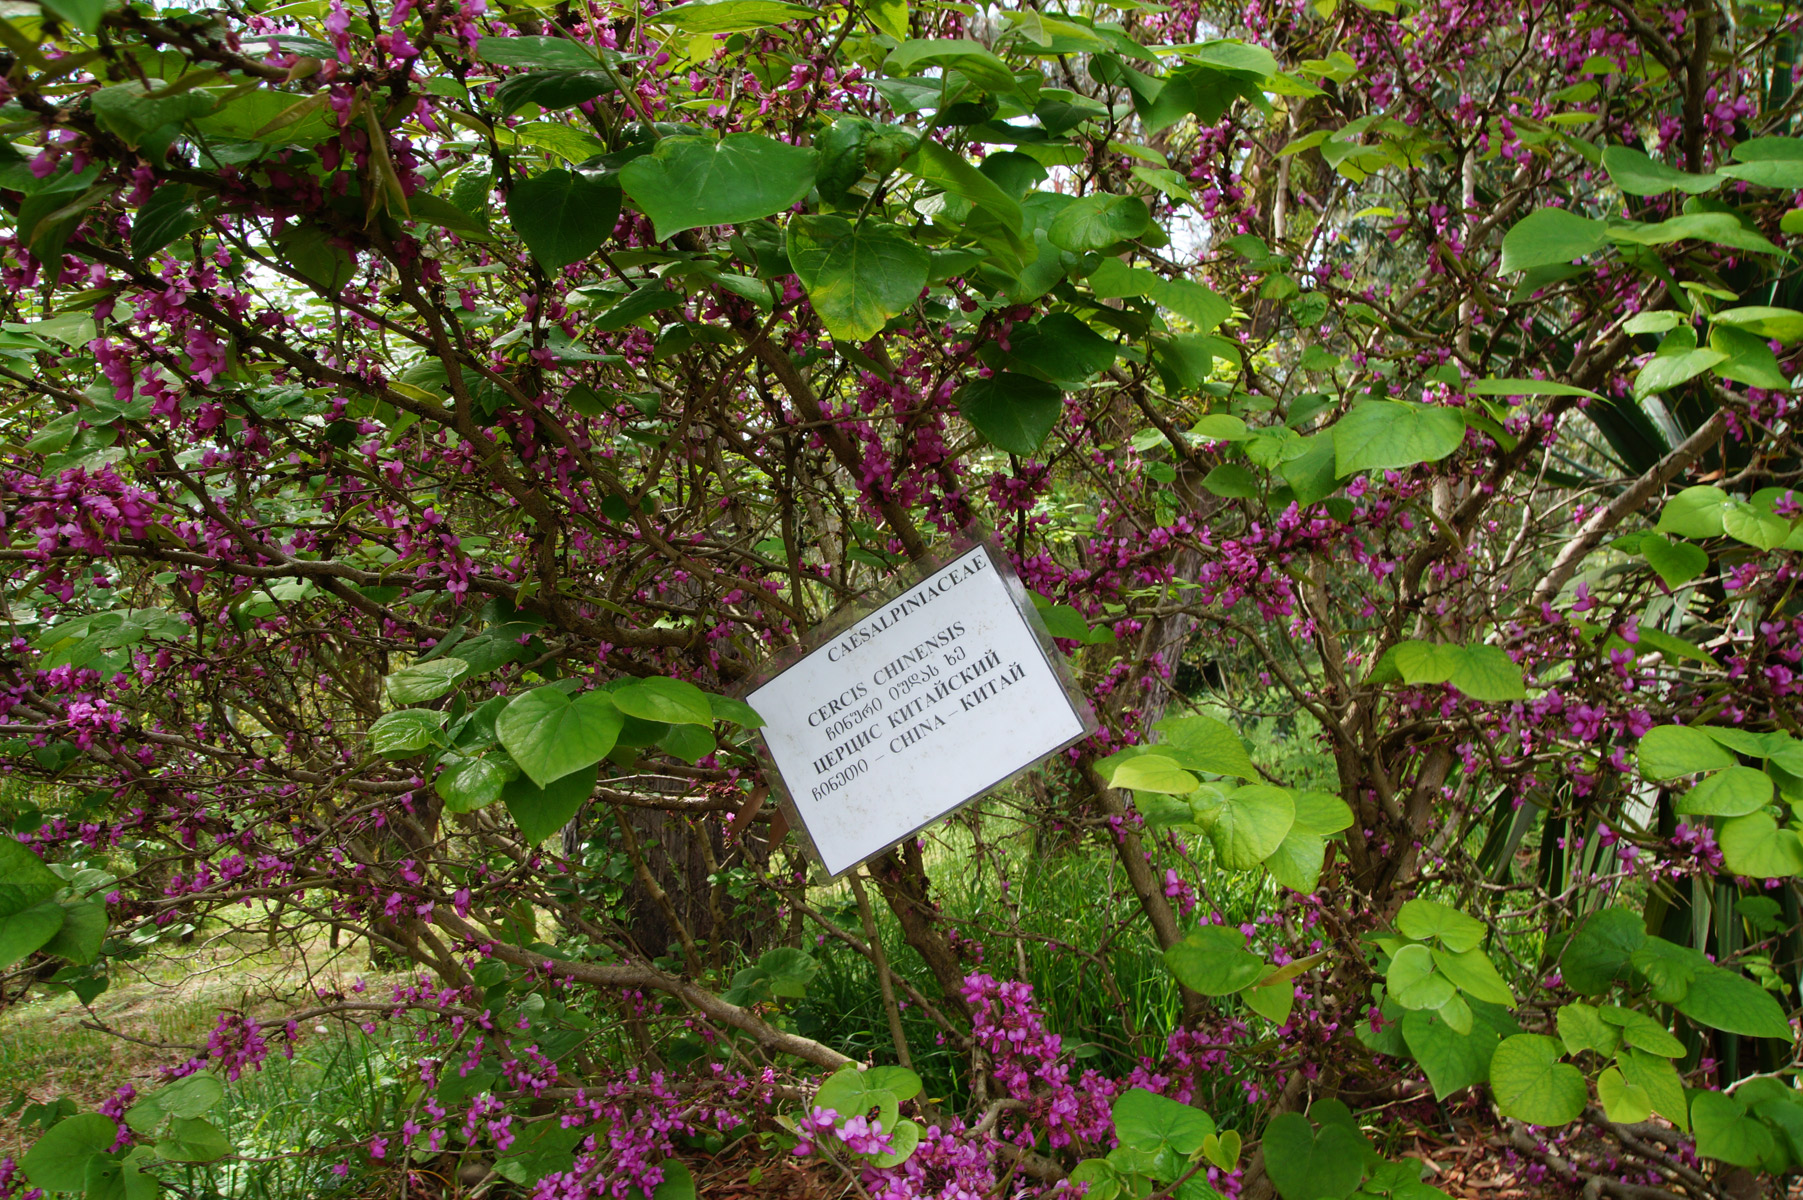 Ботанический сад, Батуми, Грузия, весна 2018